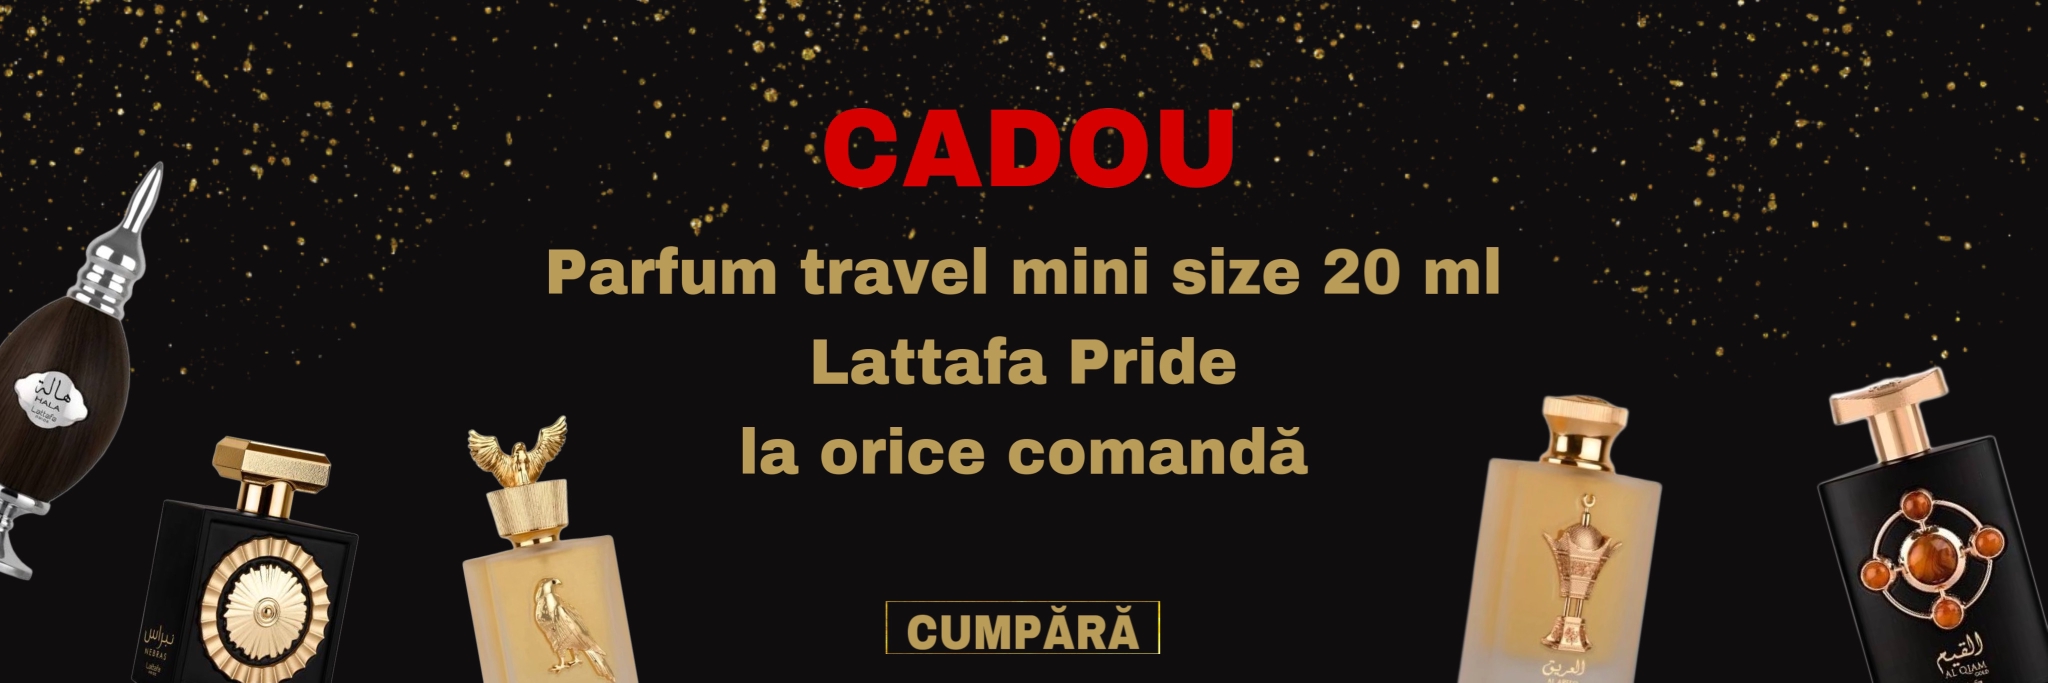 CADOU PARFUM TRAVEL SIZE 20 ML LA ORICE COMANDA DE PARFUM ARABESC